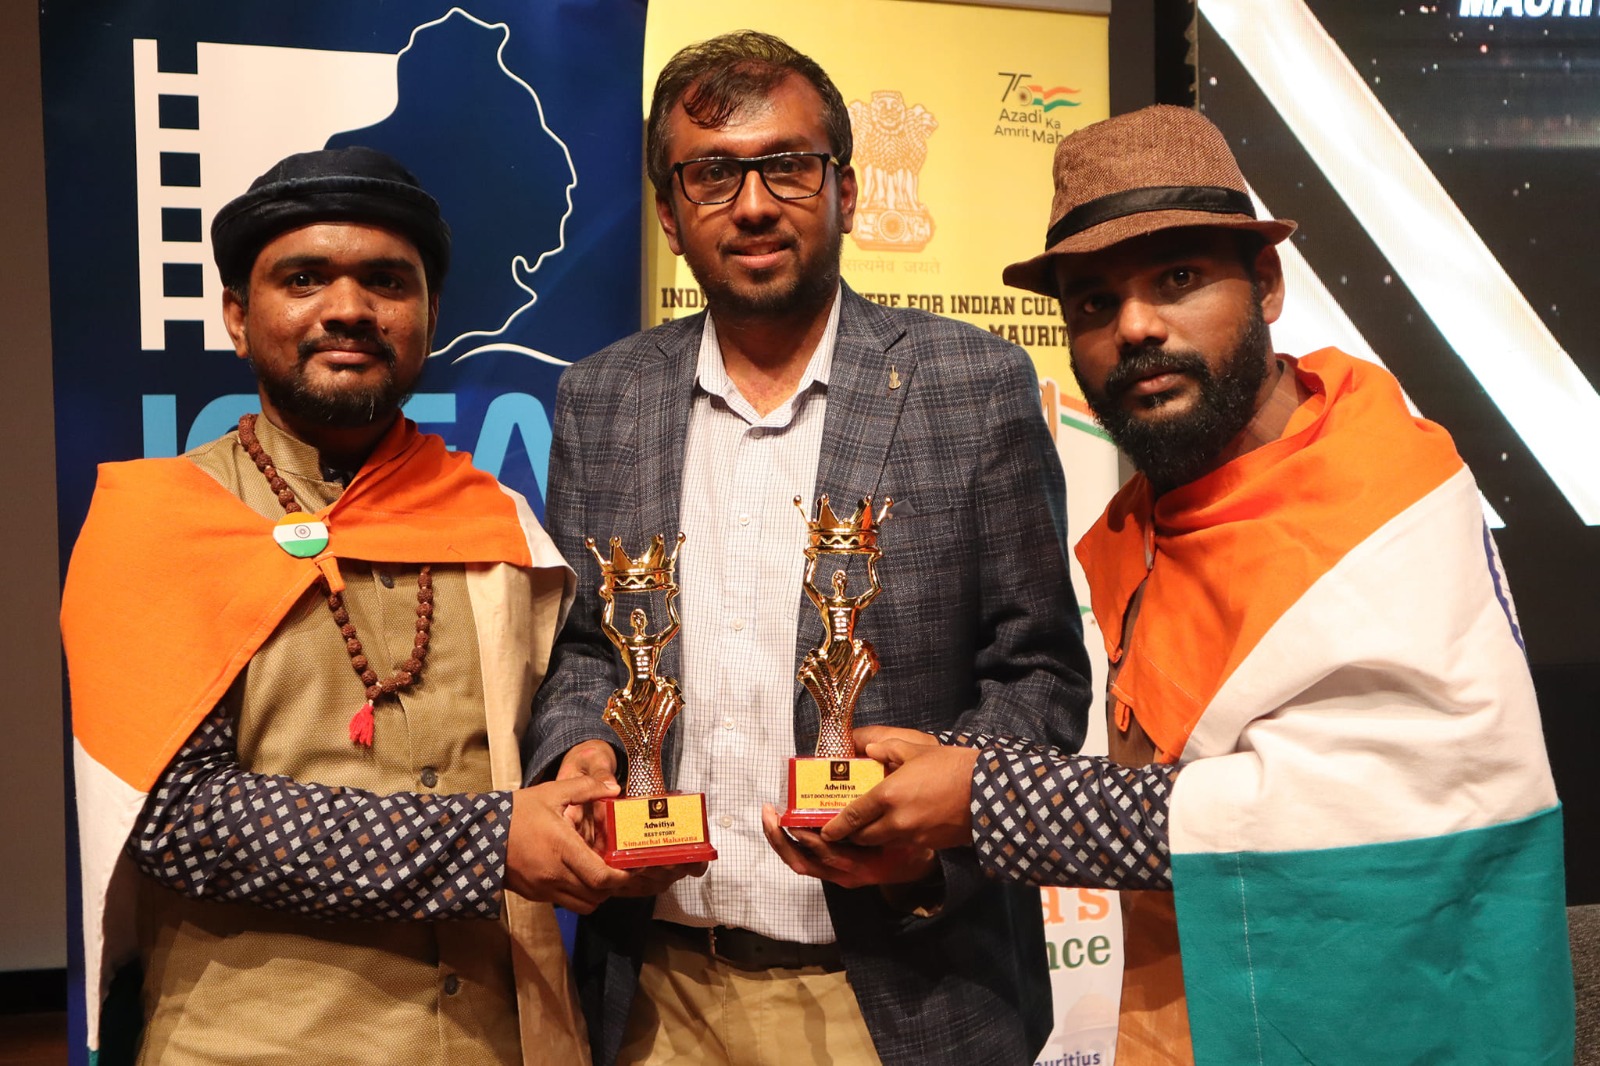 Ganjam's film 'Adwitiya' wins two awards at the Mauritius Film Festival